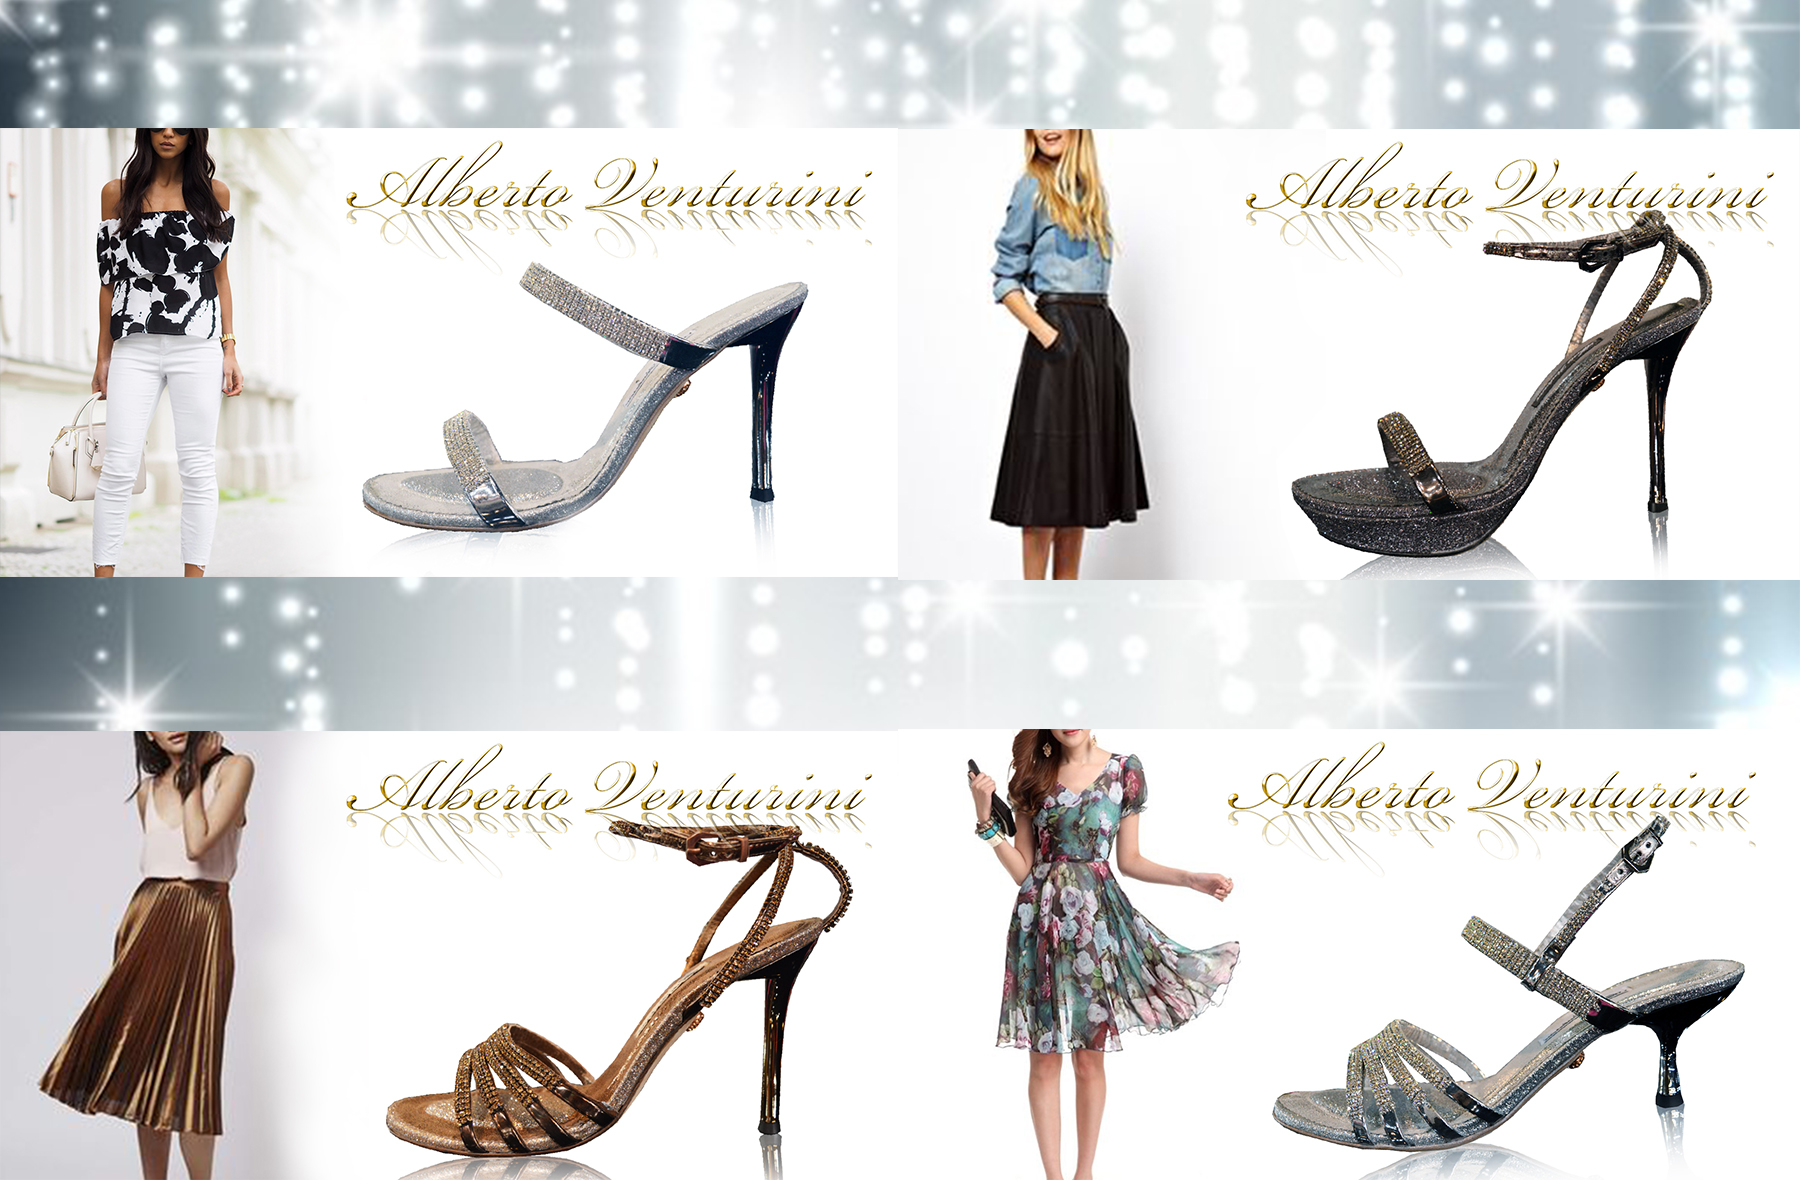 Alberto Venturini - Official online shop